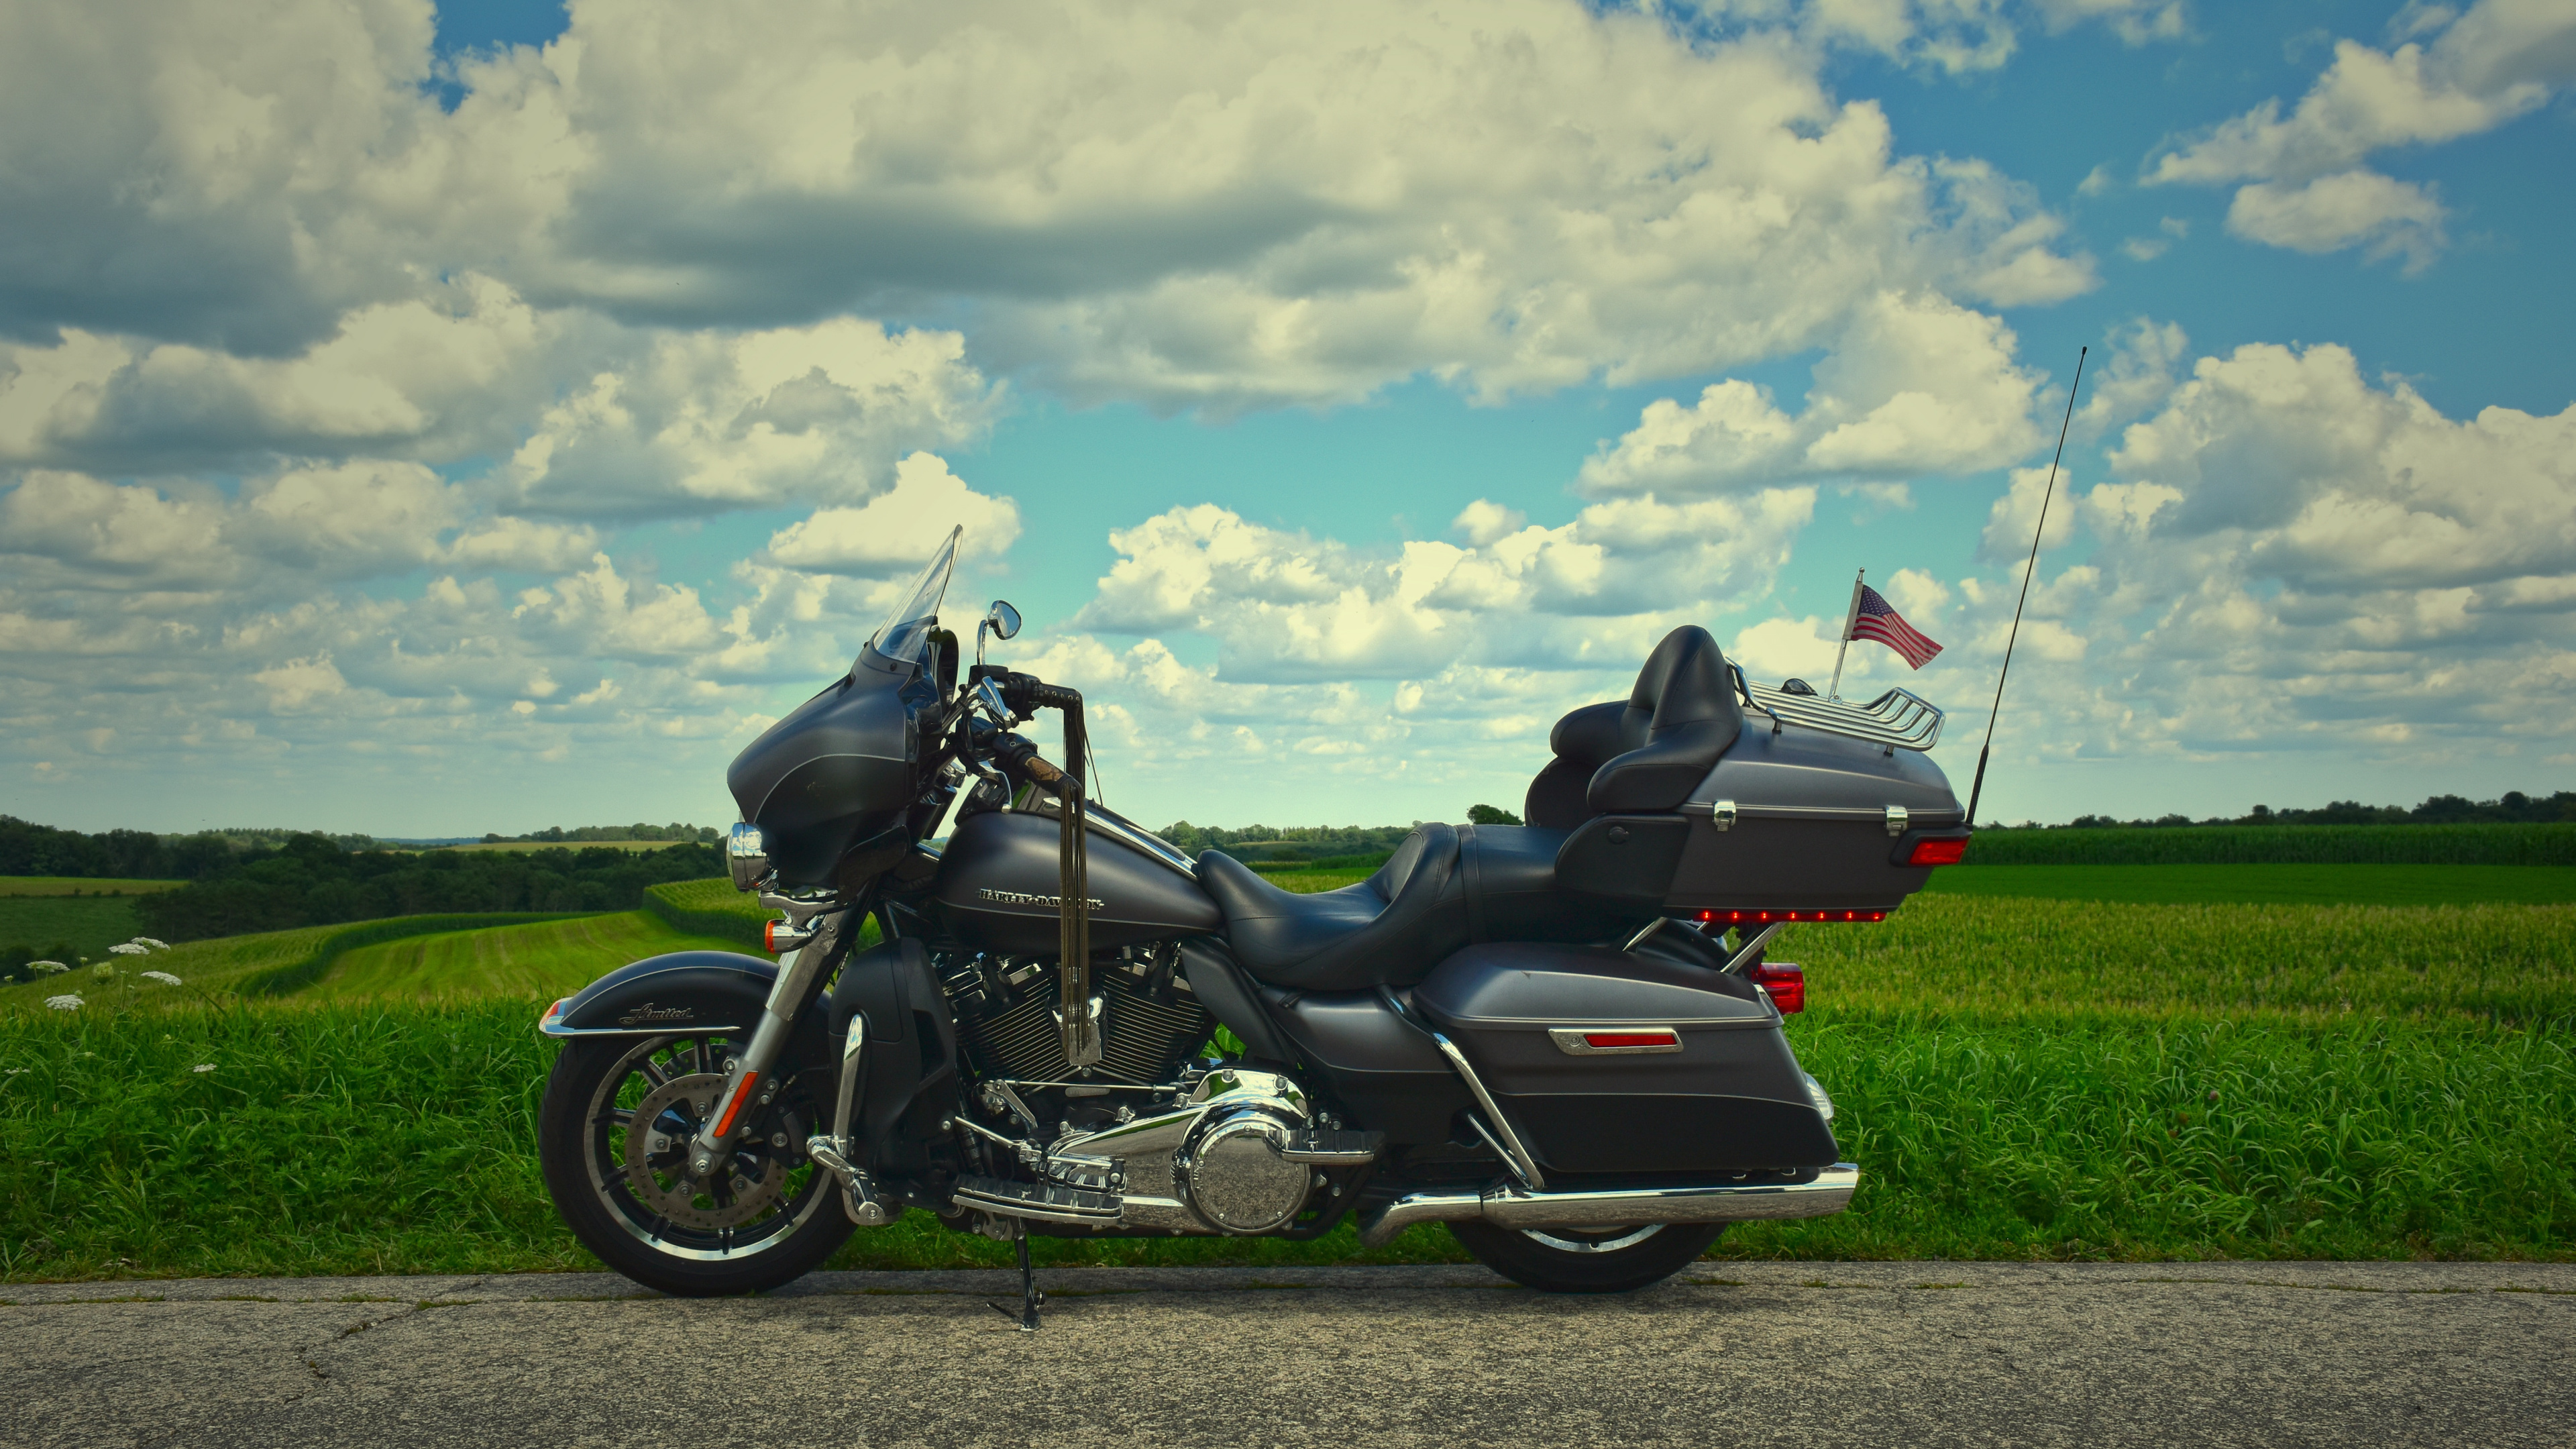 Обои мотоцикл, облако, аксессуары для мотоциклов, мотоспорт, дорога в разрешении 3840x2160